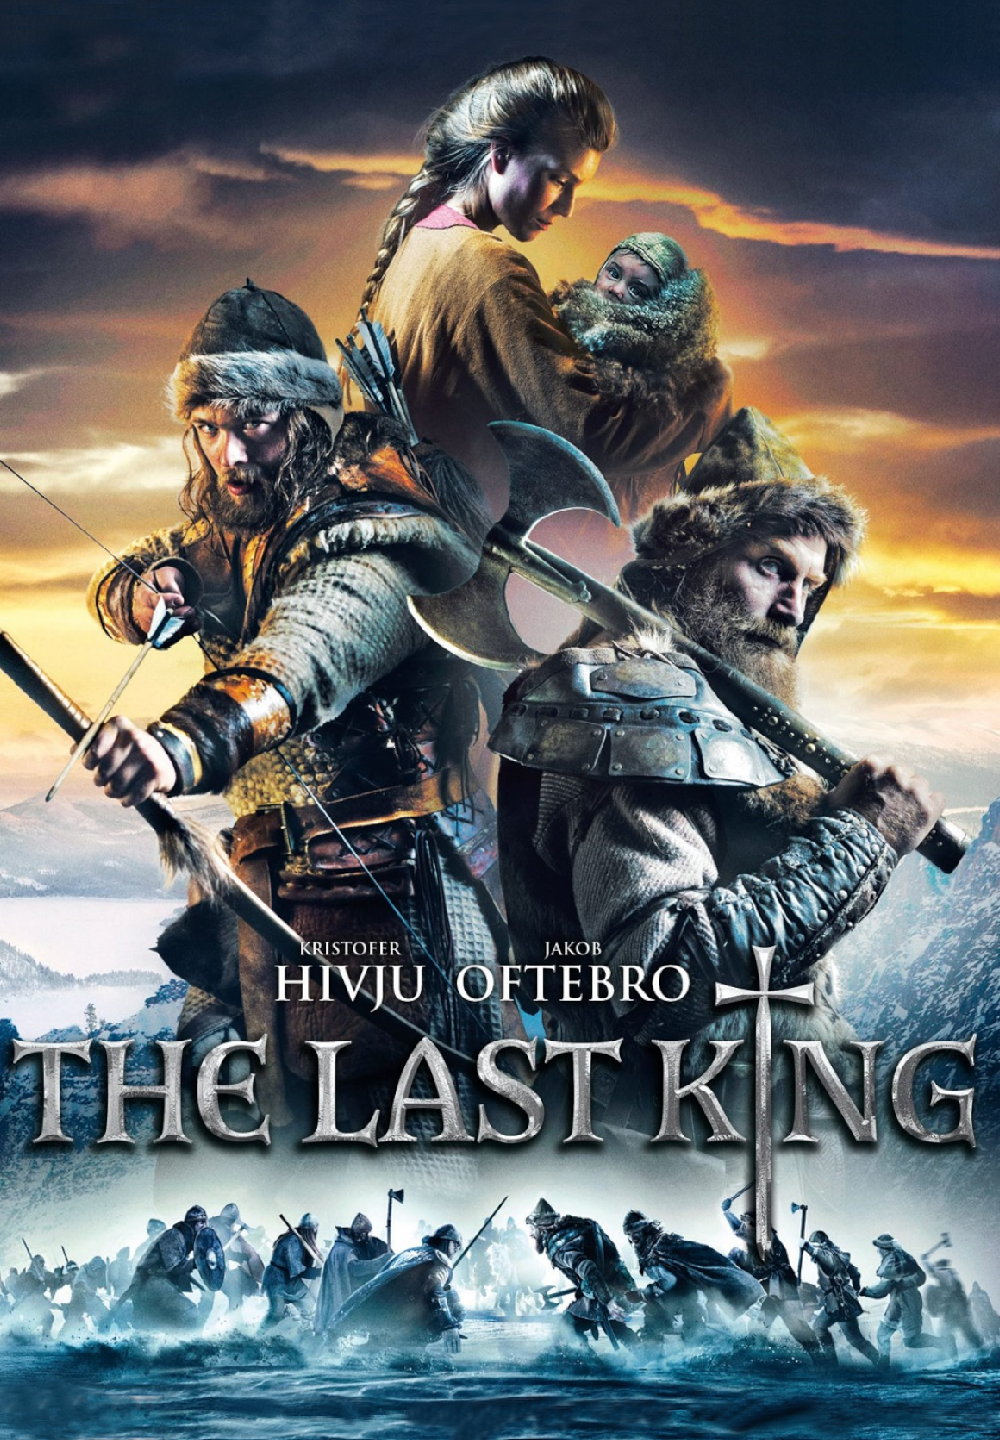 The Last King [HD] (2016)